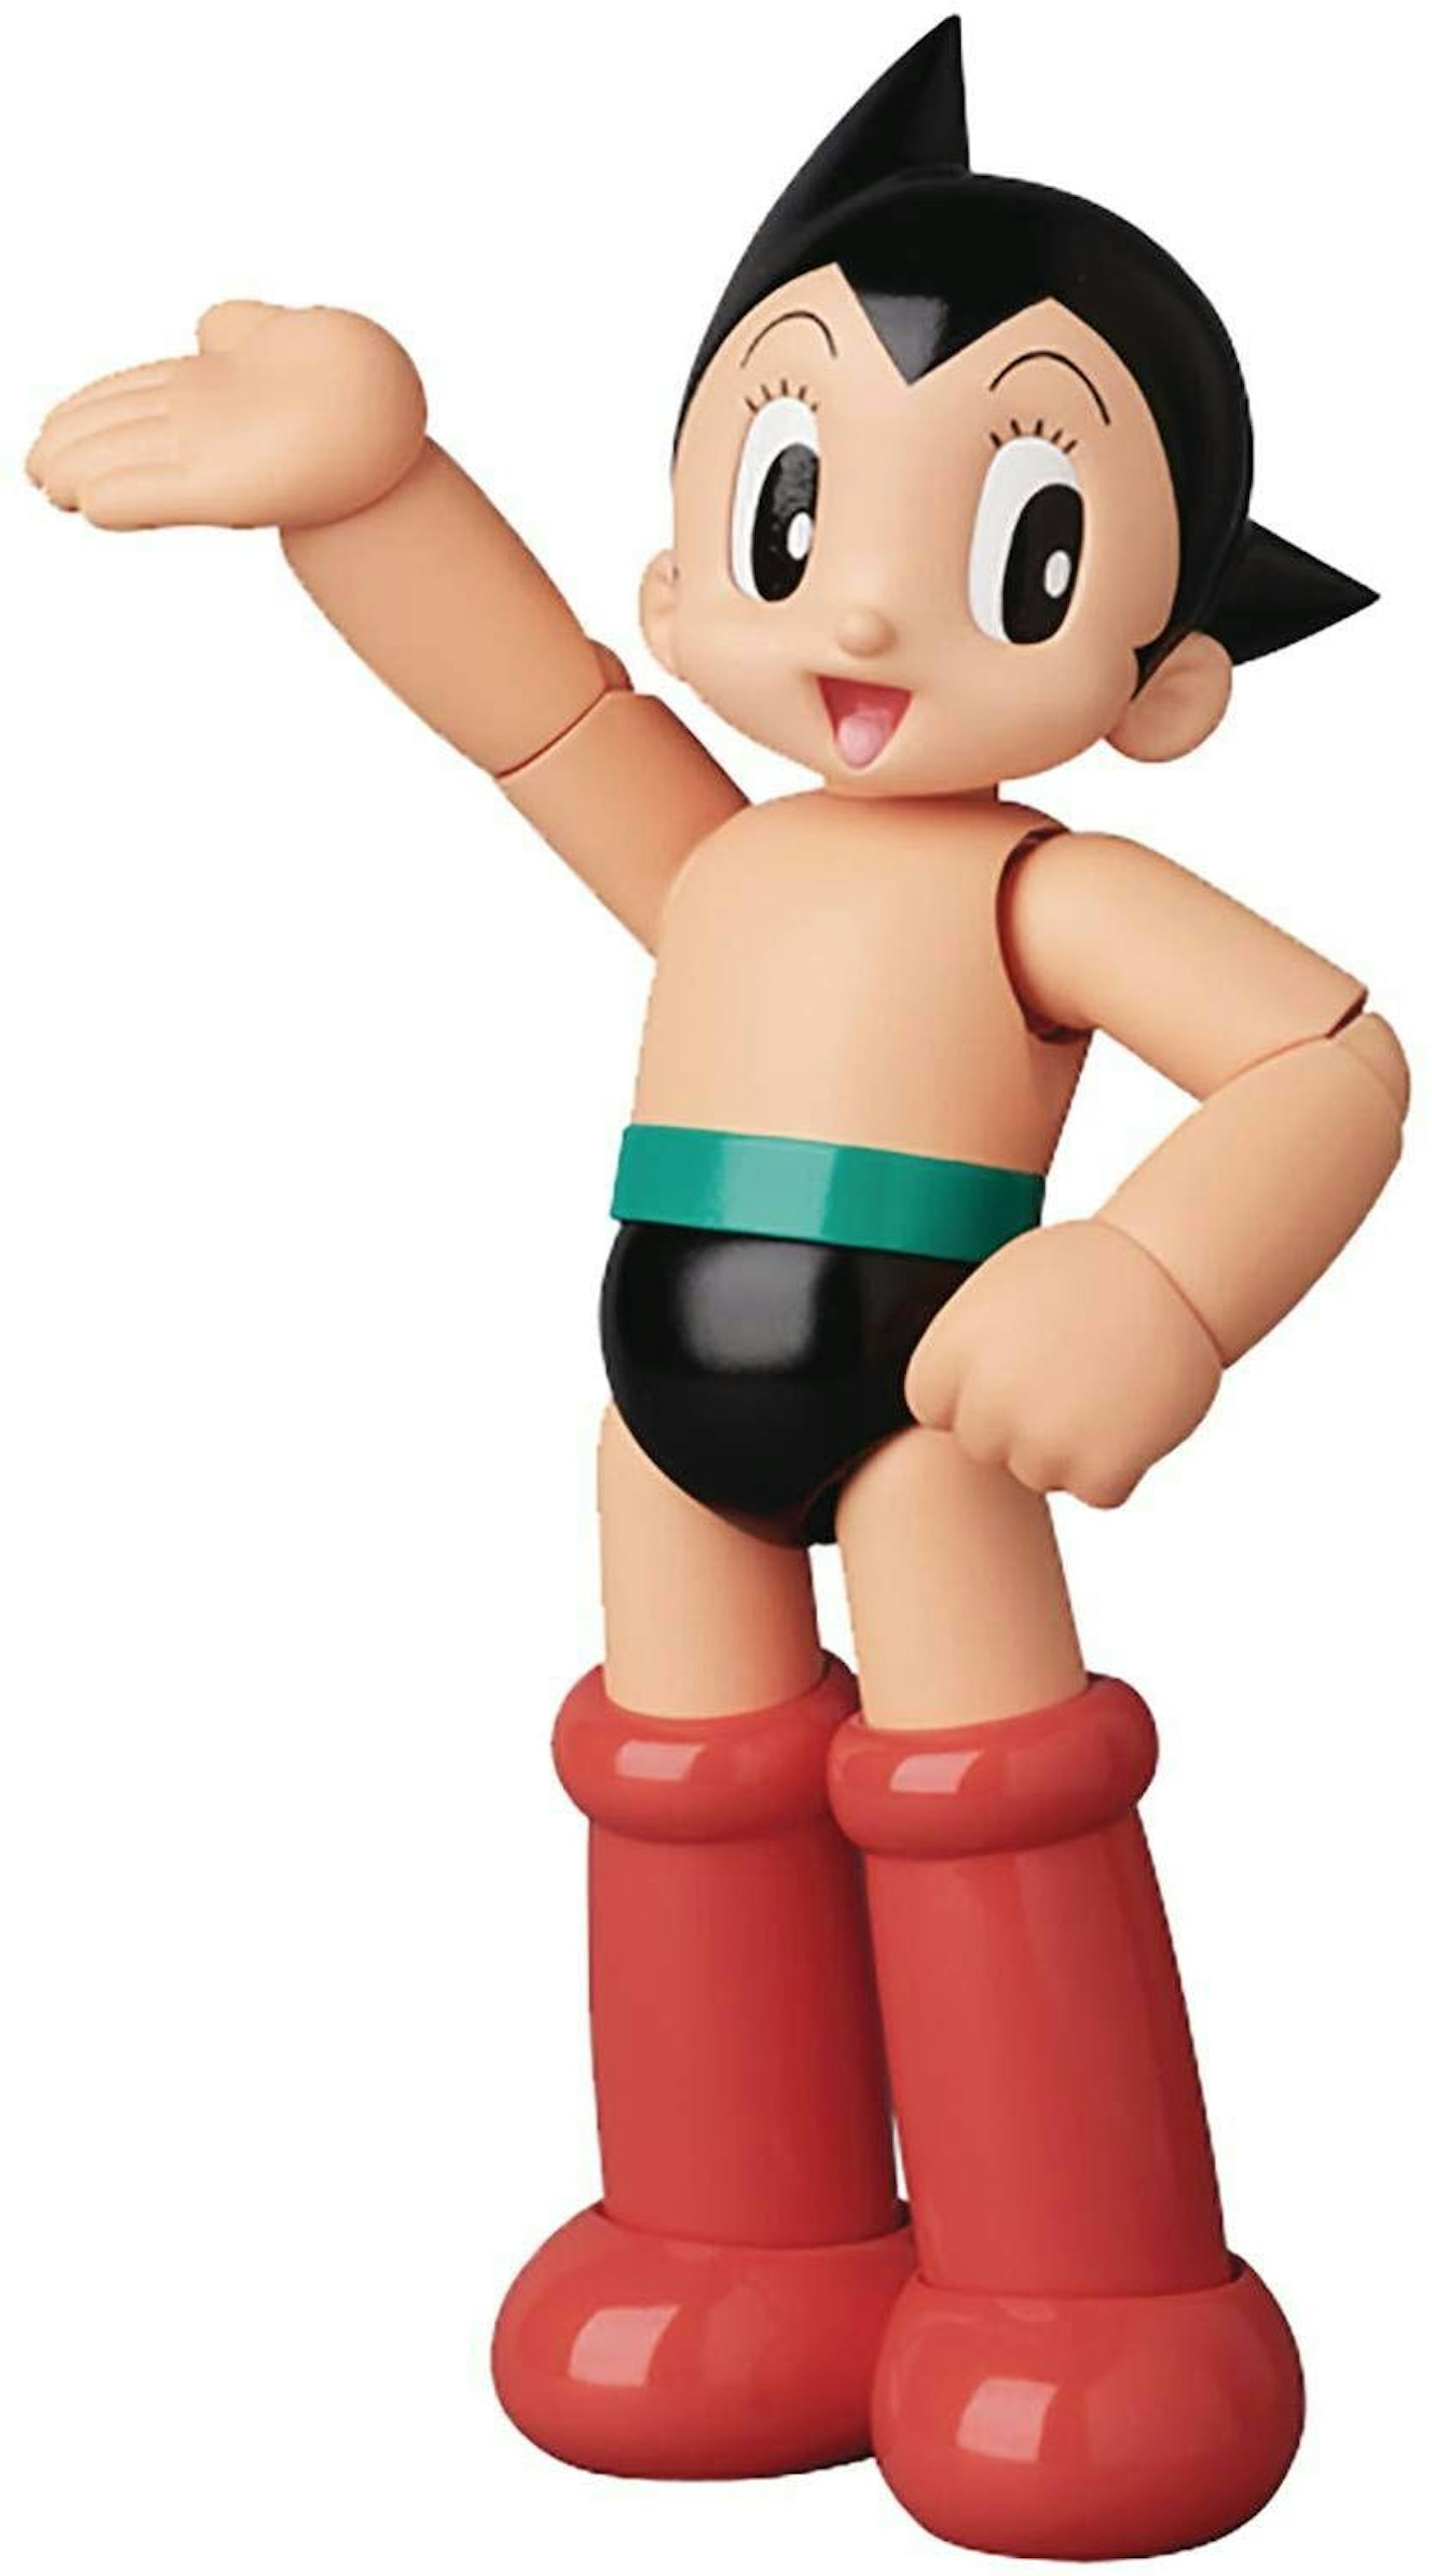 Astro Boy Action Figure, £79.00